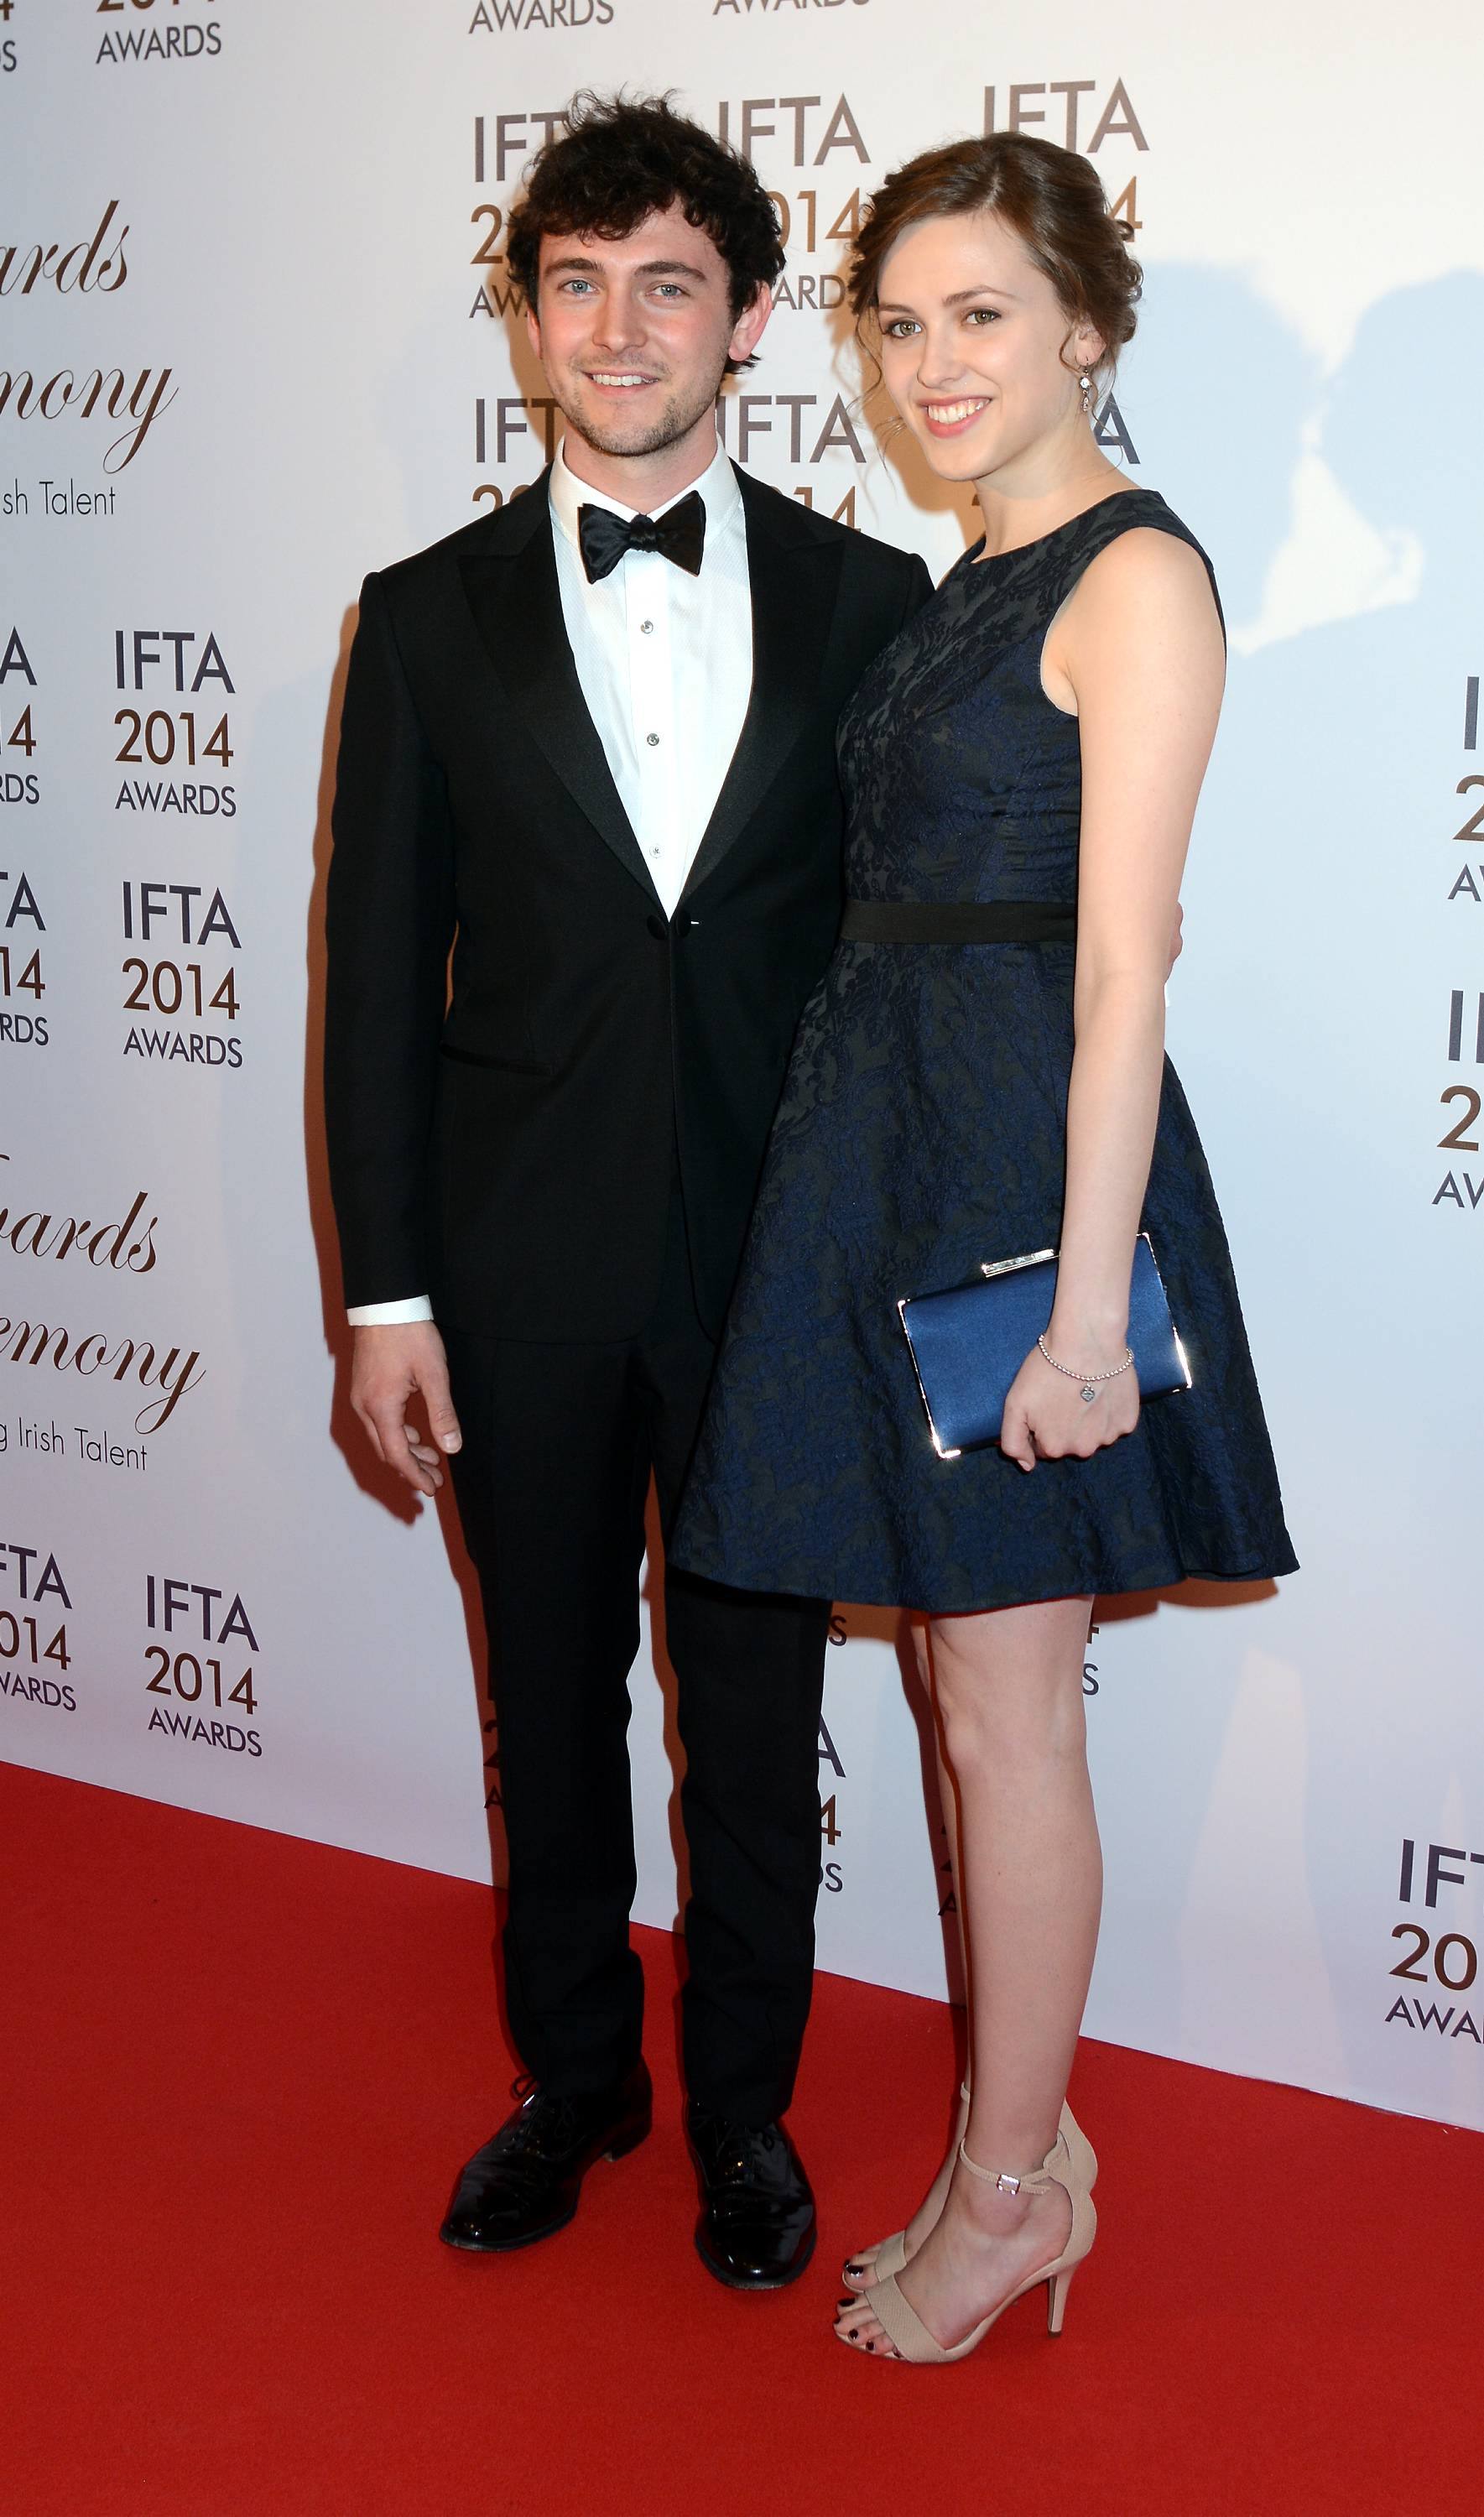 George Blagden and Elinor Crawley at the IFTA Awards 2014